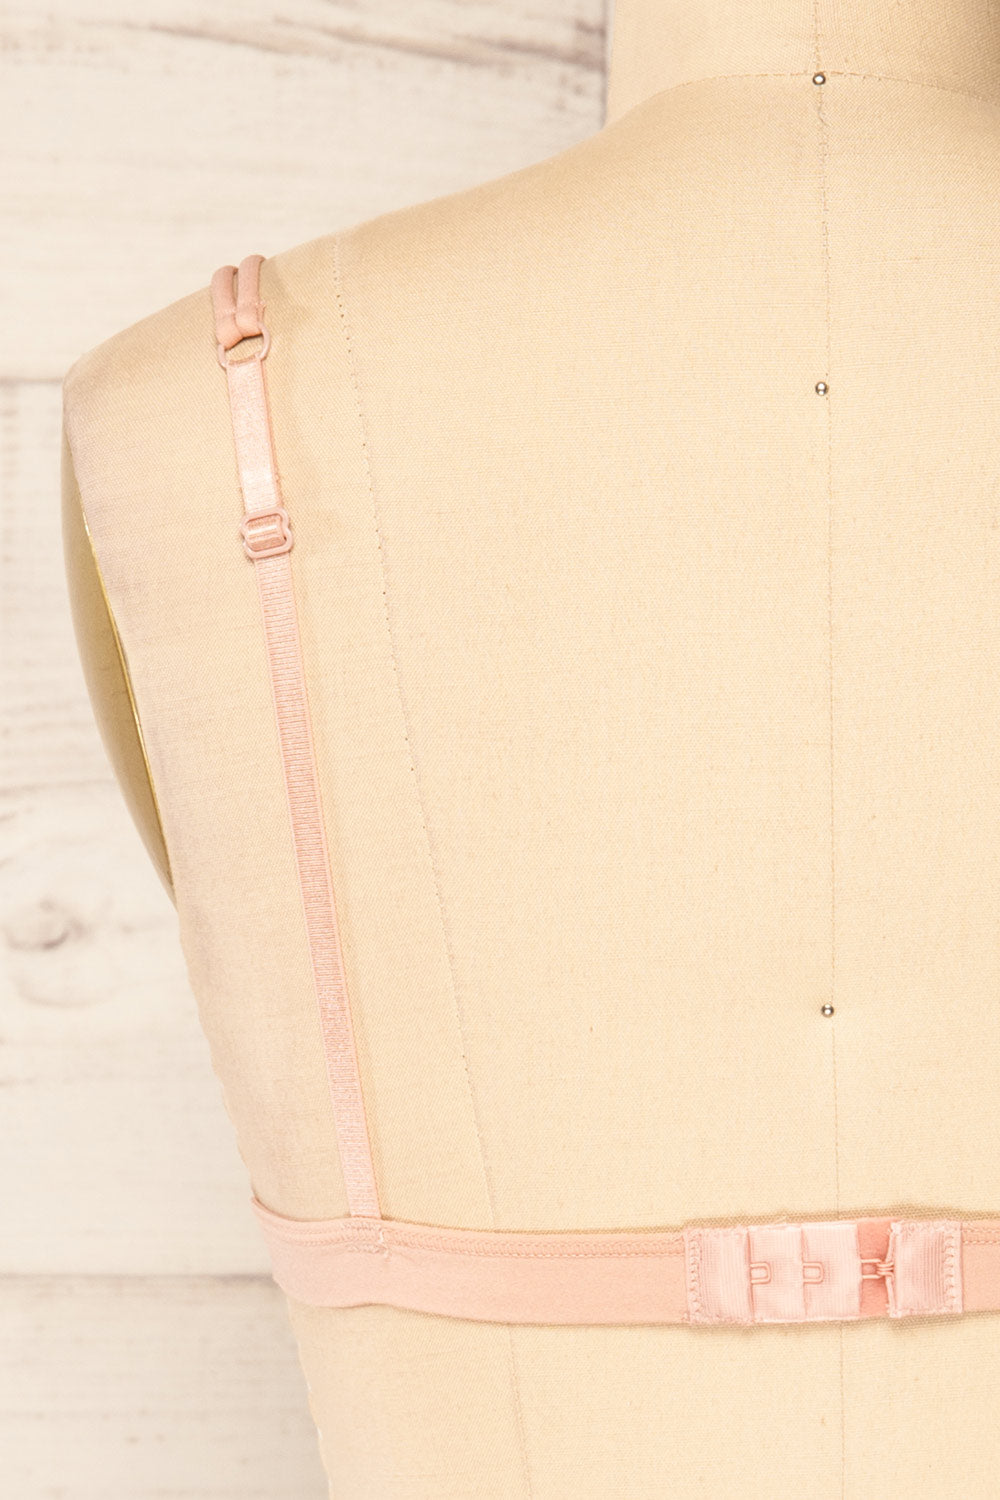 Ati Pink Lace Bralette | Boutique 1861 back close-up